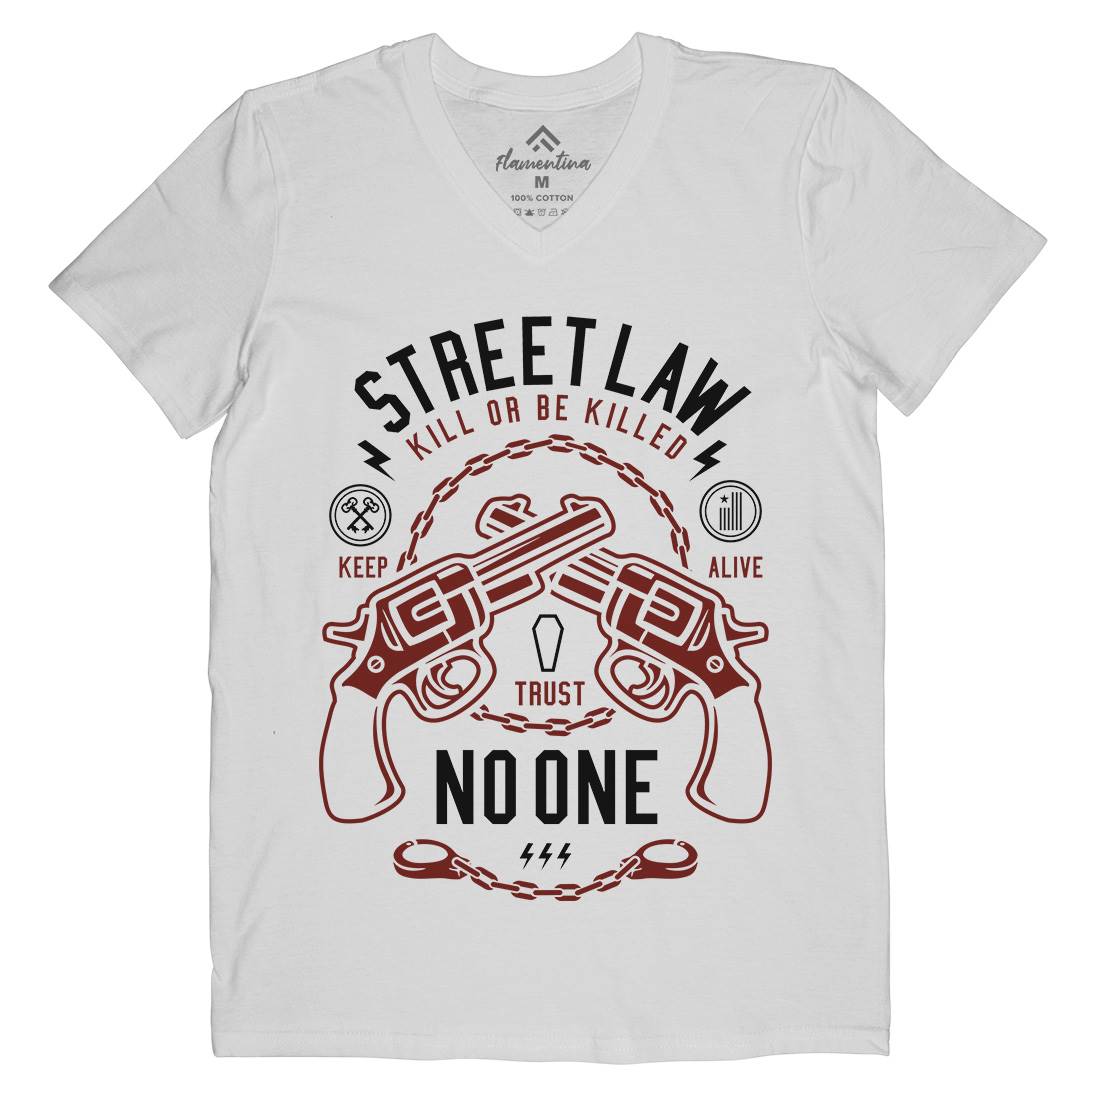 Street Law Mens Organic V-Neck T-Shirt Quotes A286